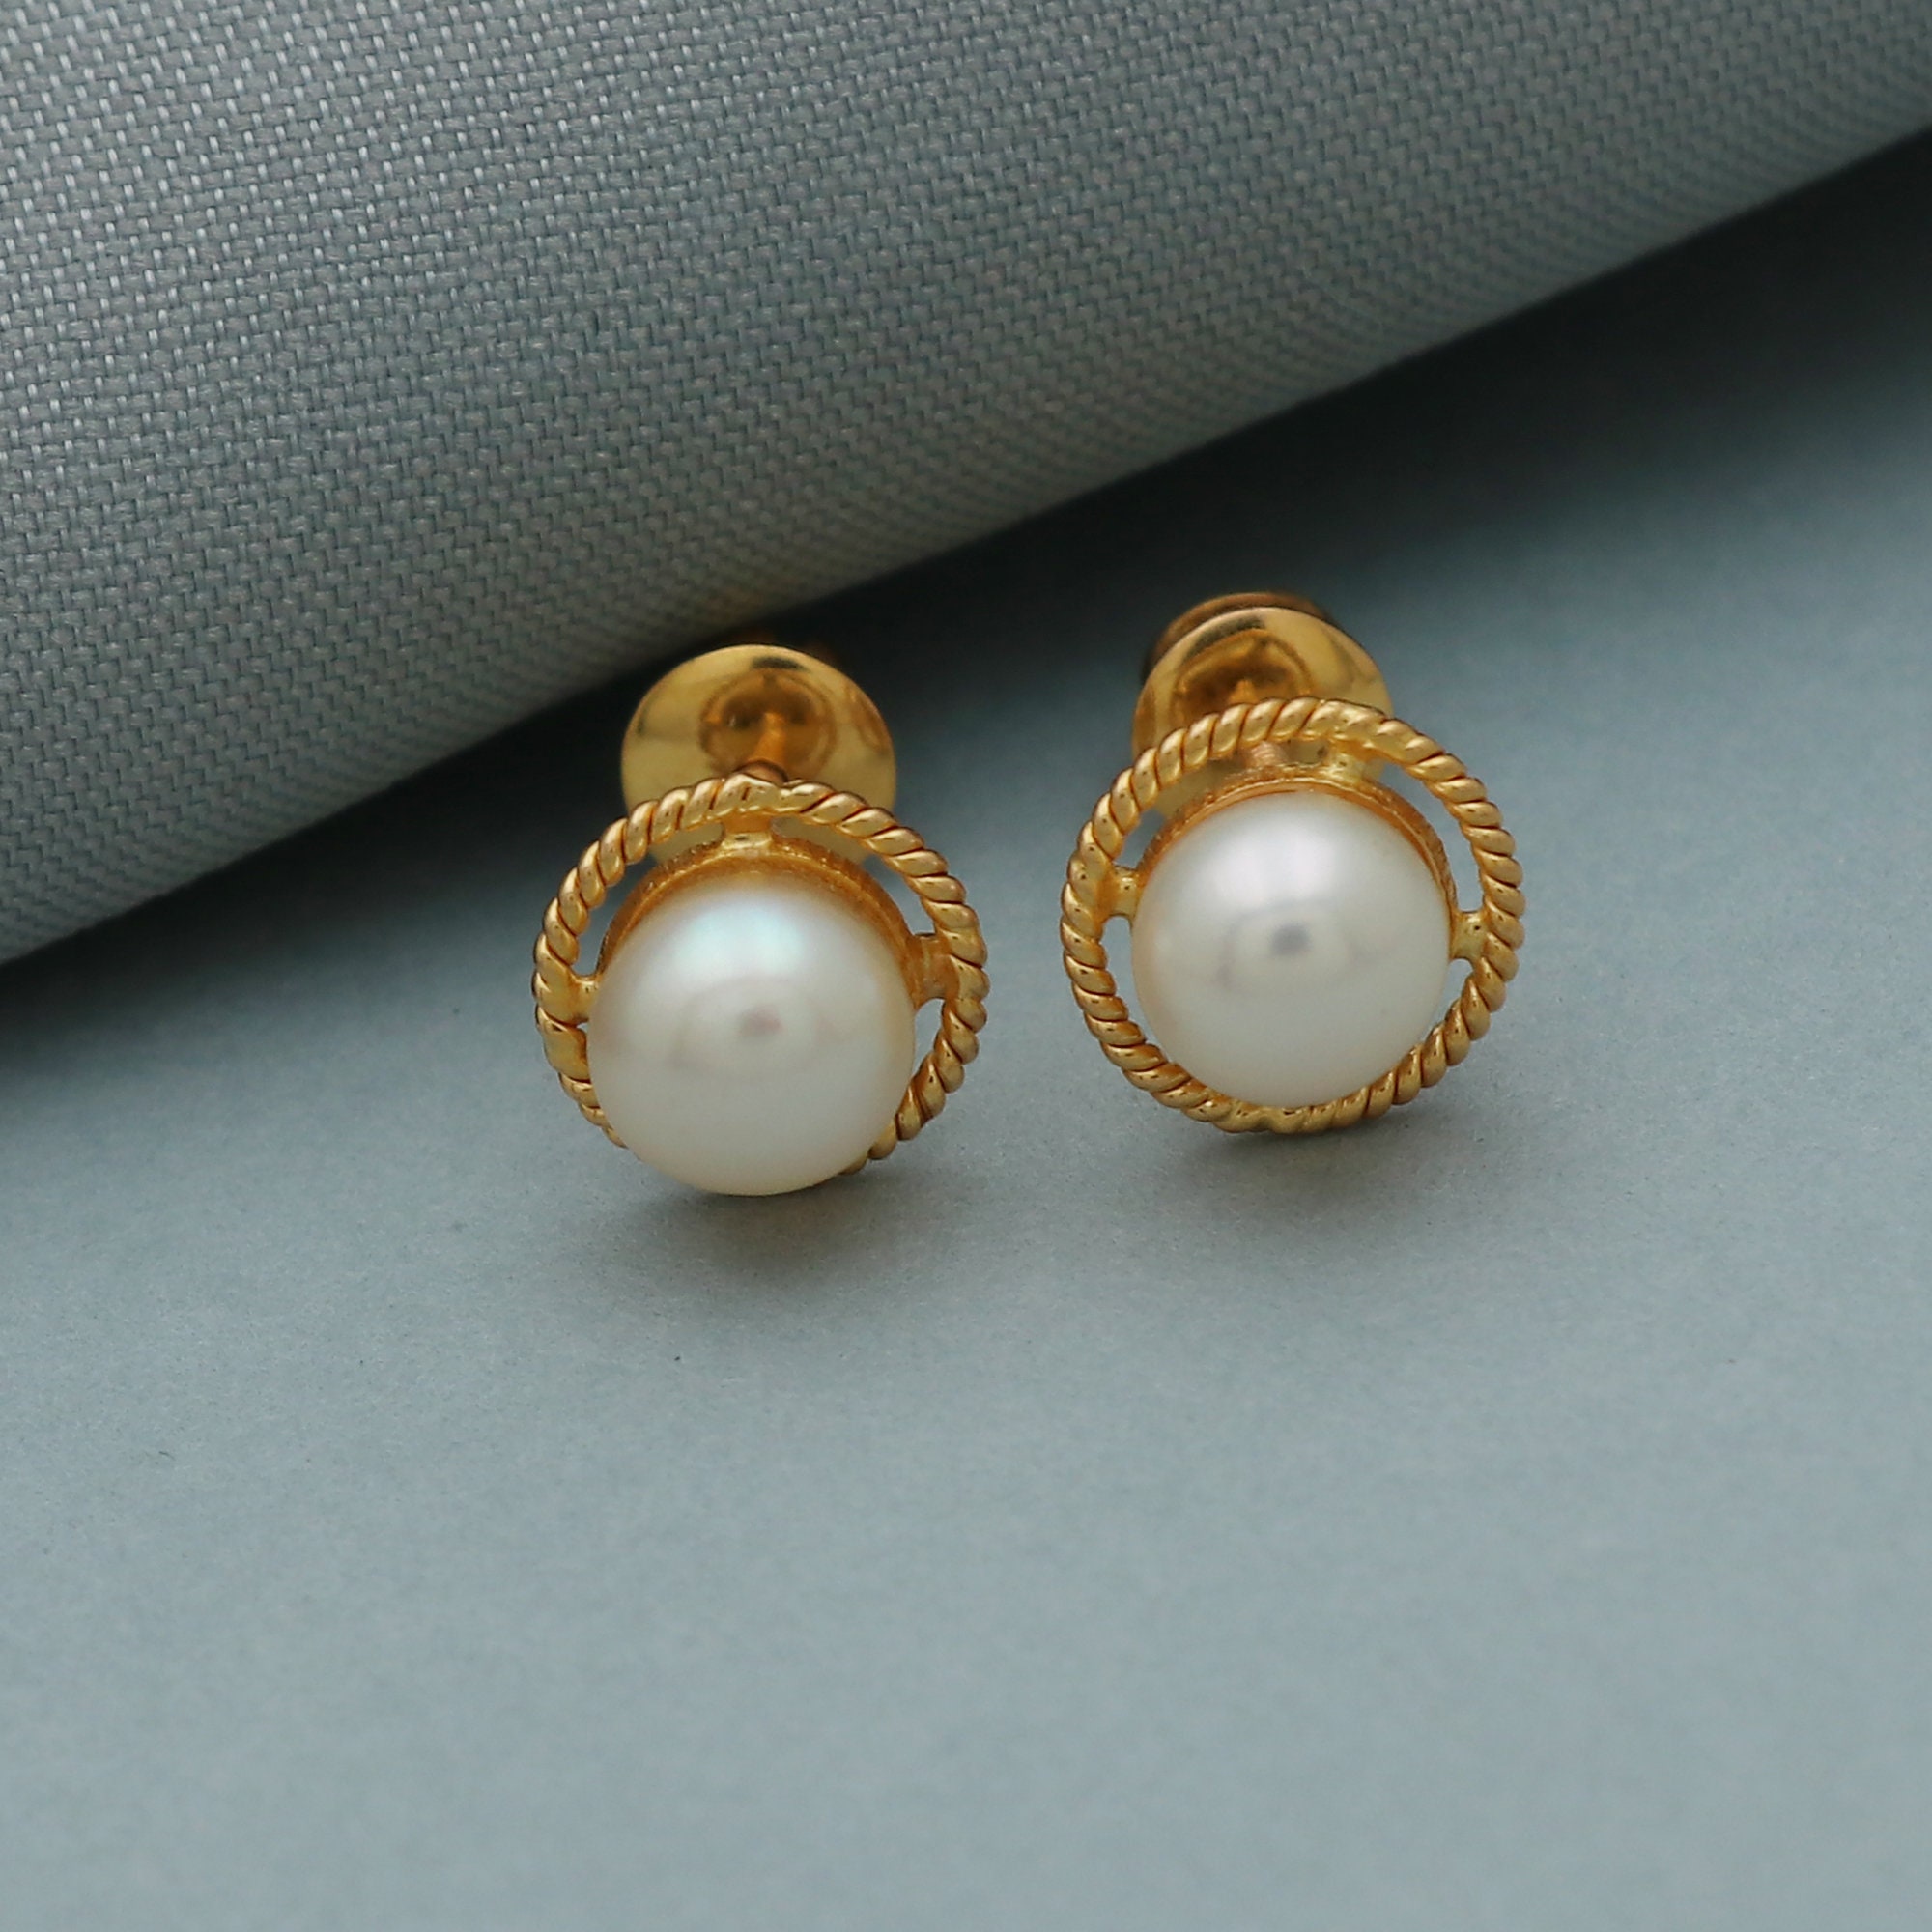 Fashionable western stylish 24k gold pearls long earrings